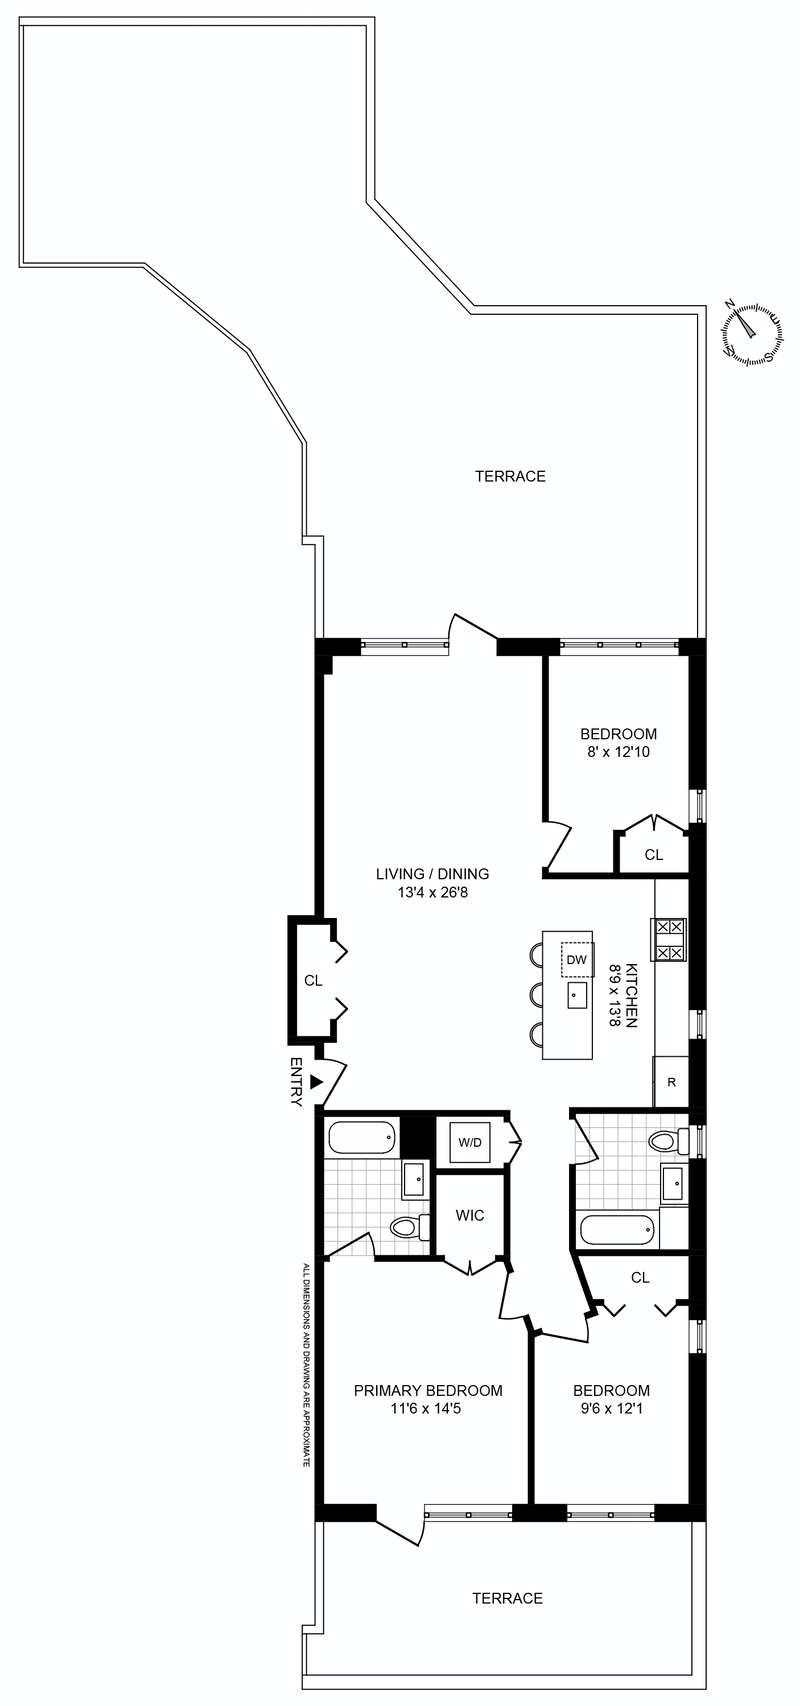 Floorplan for 65 Park Place, 2A